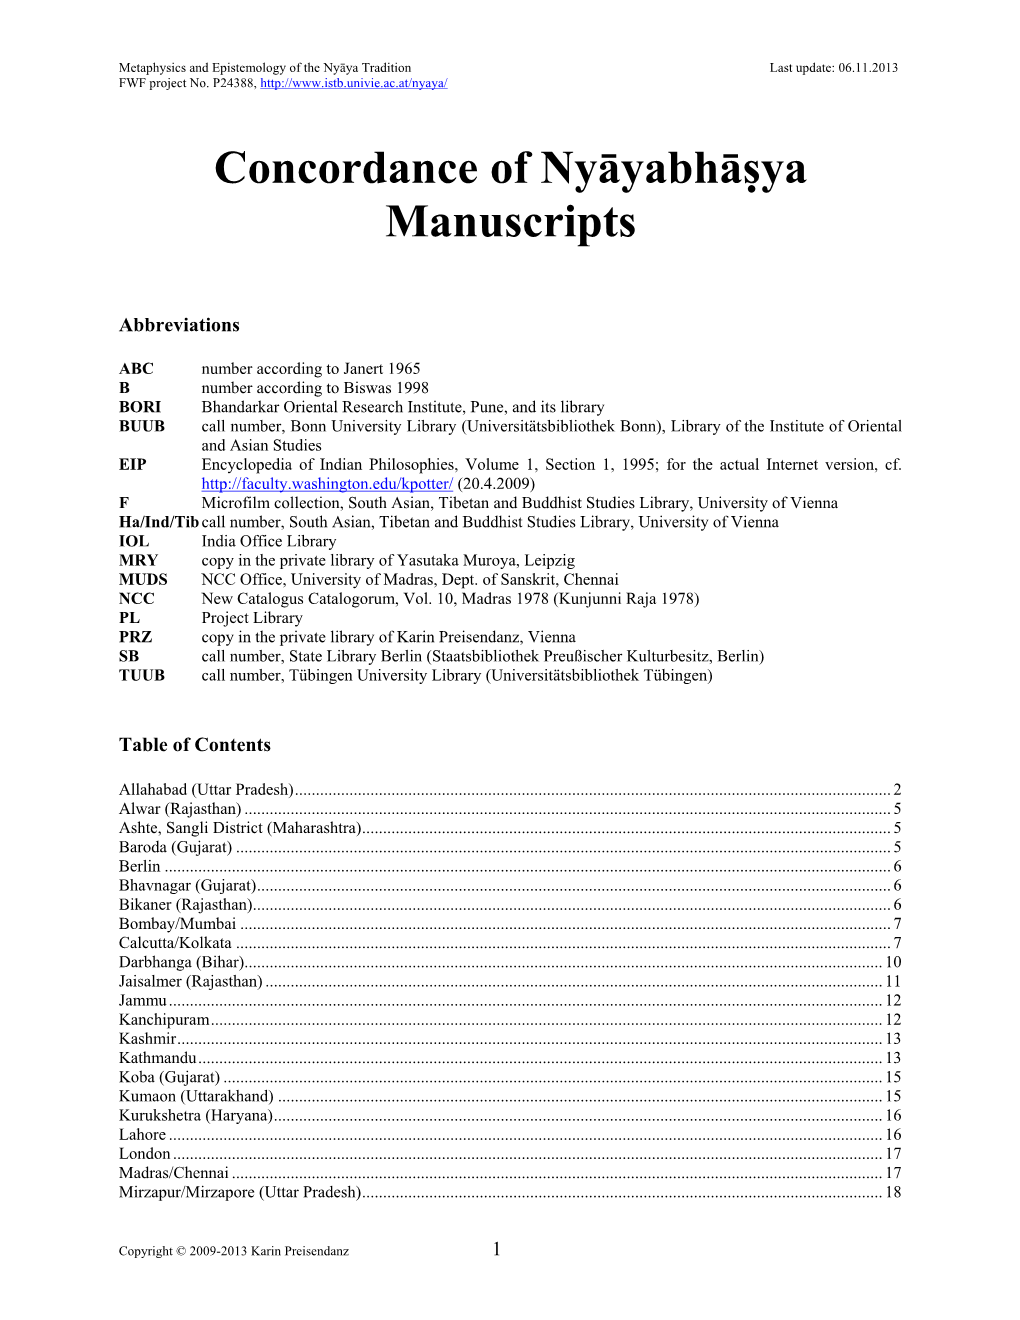 Concordance of Nyāyabhāṣya Manuscripts